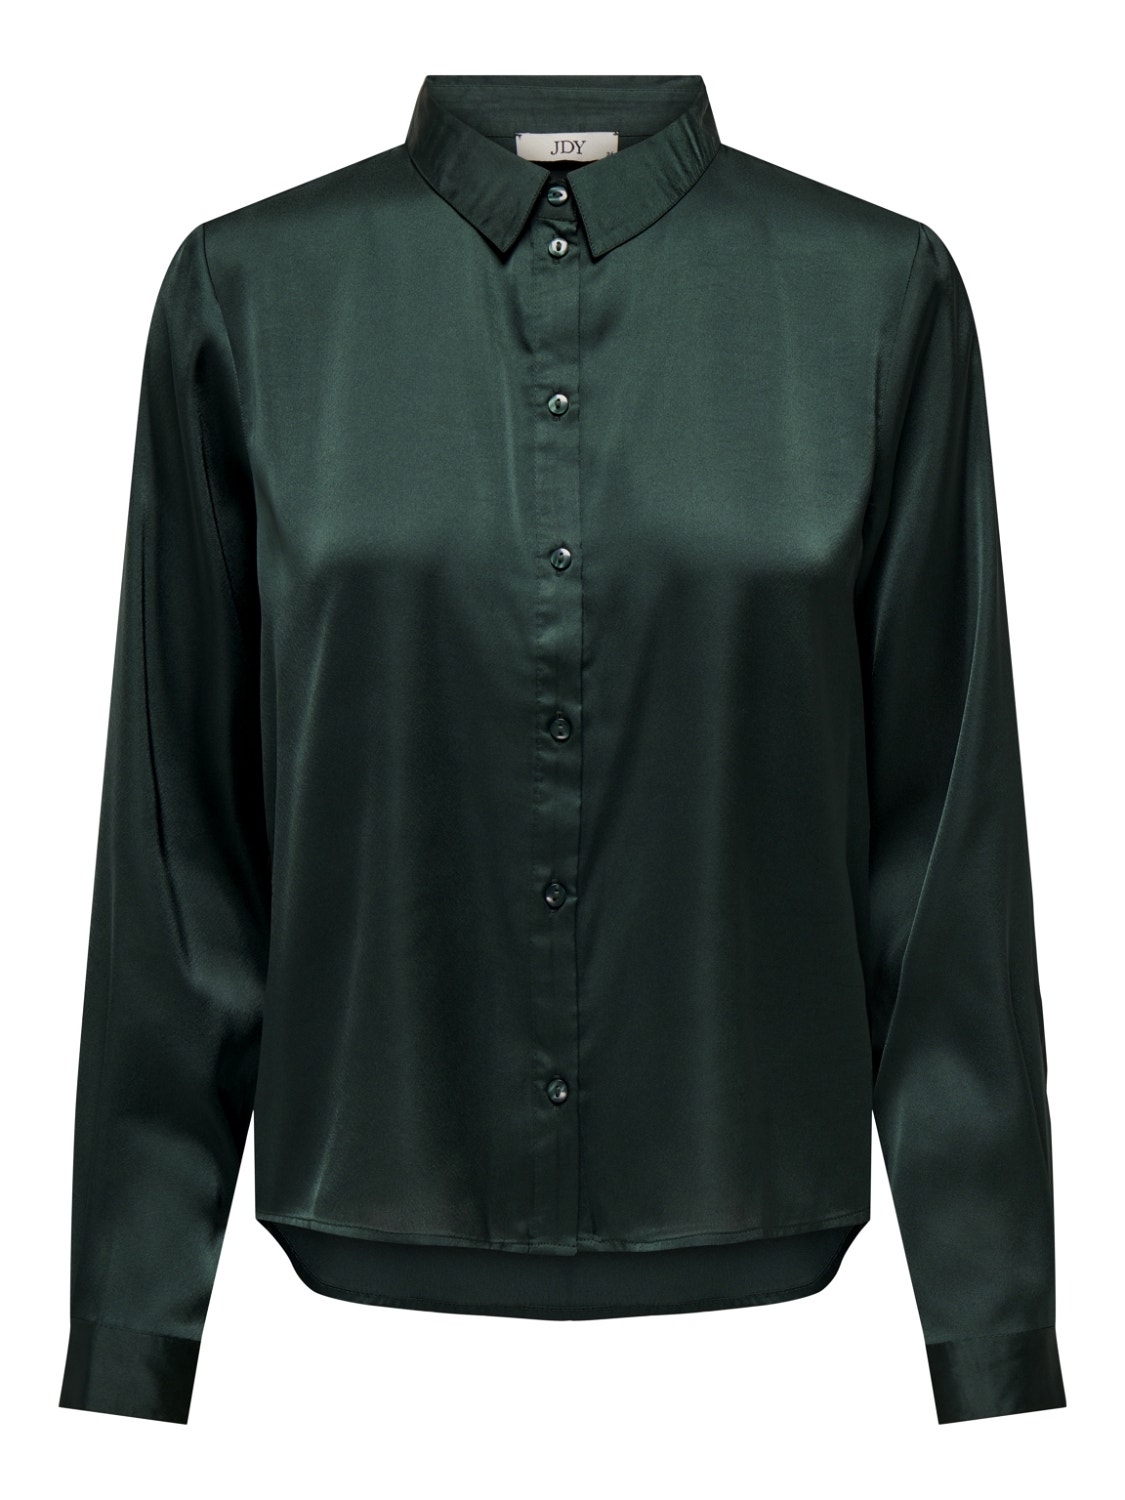 ONLY Chemises Regular Fit Col chemise Poignets boutonnés -Scarab - 15203504